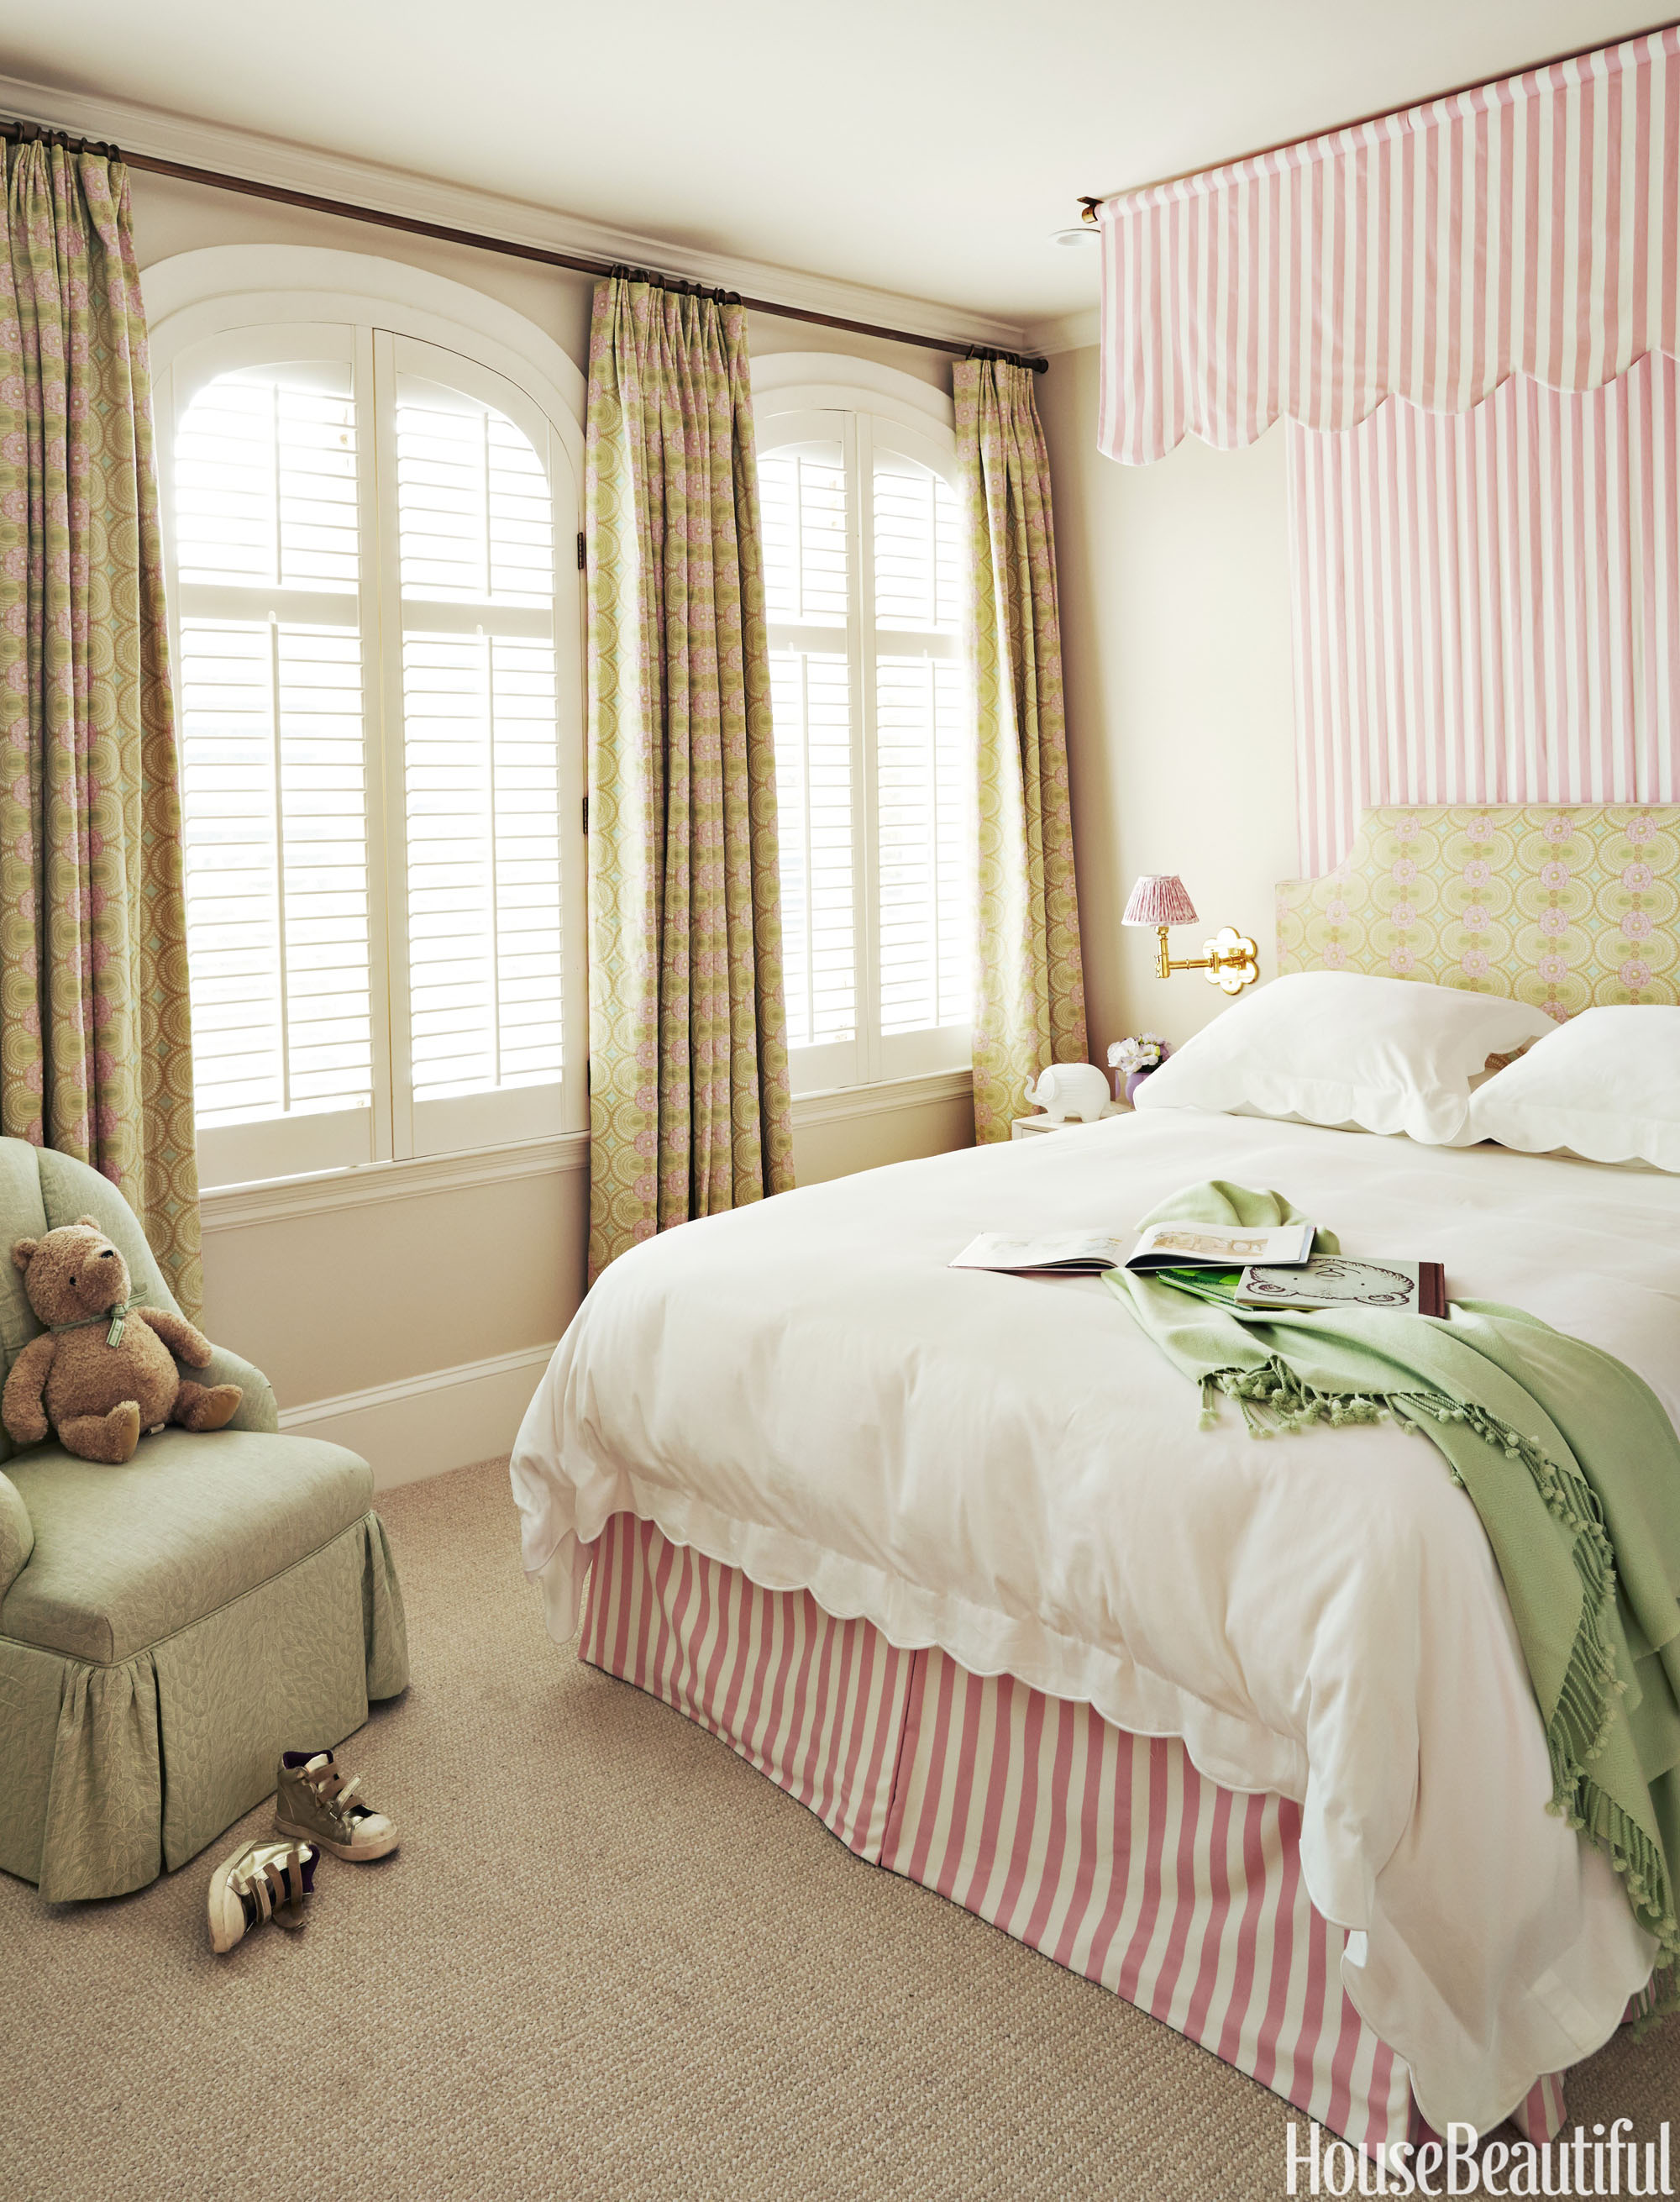 bedroom decor ideas 175+ stylish bedroom decorating ideas - design pictures of beautiful modern LGSGTOJ